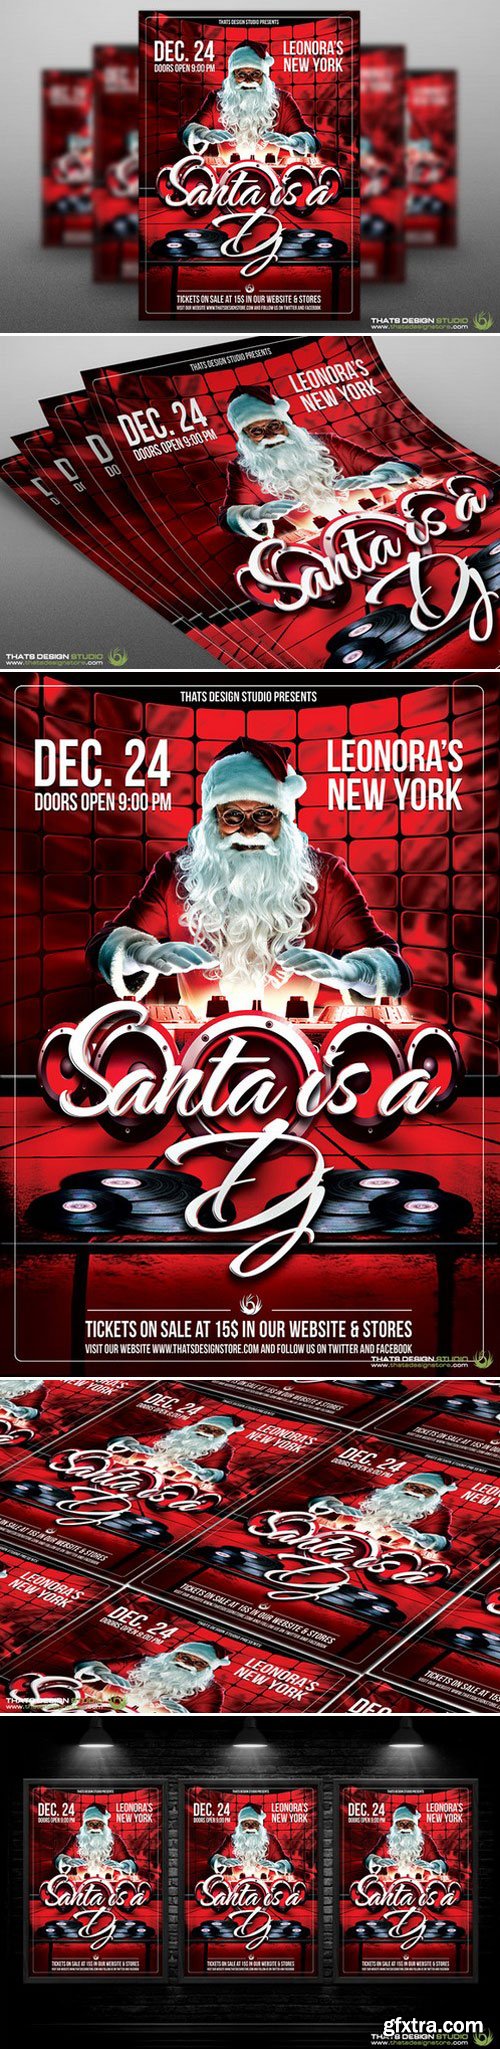 CM - Santa is a DJ Flyer Template 92542